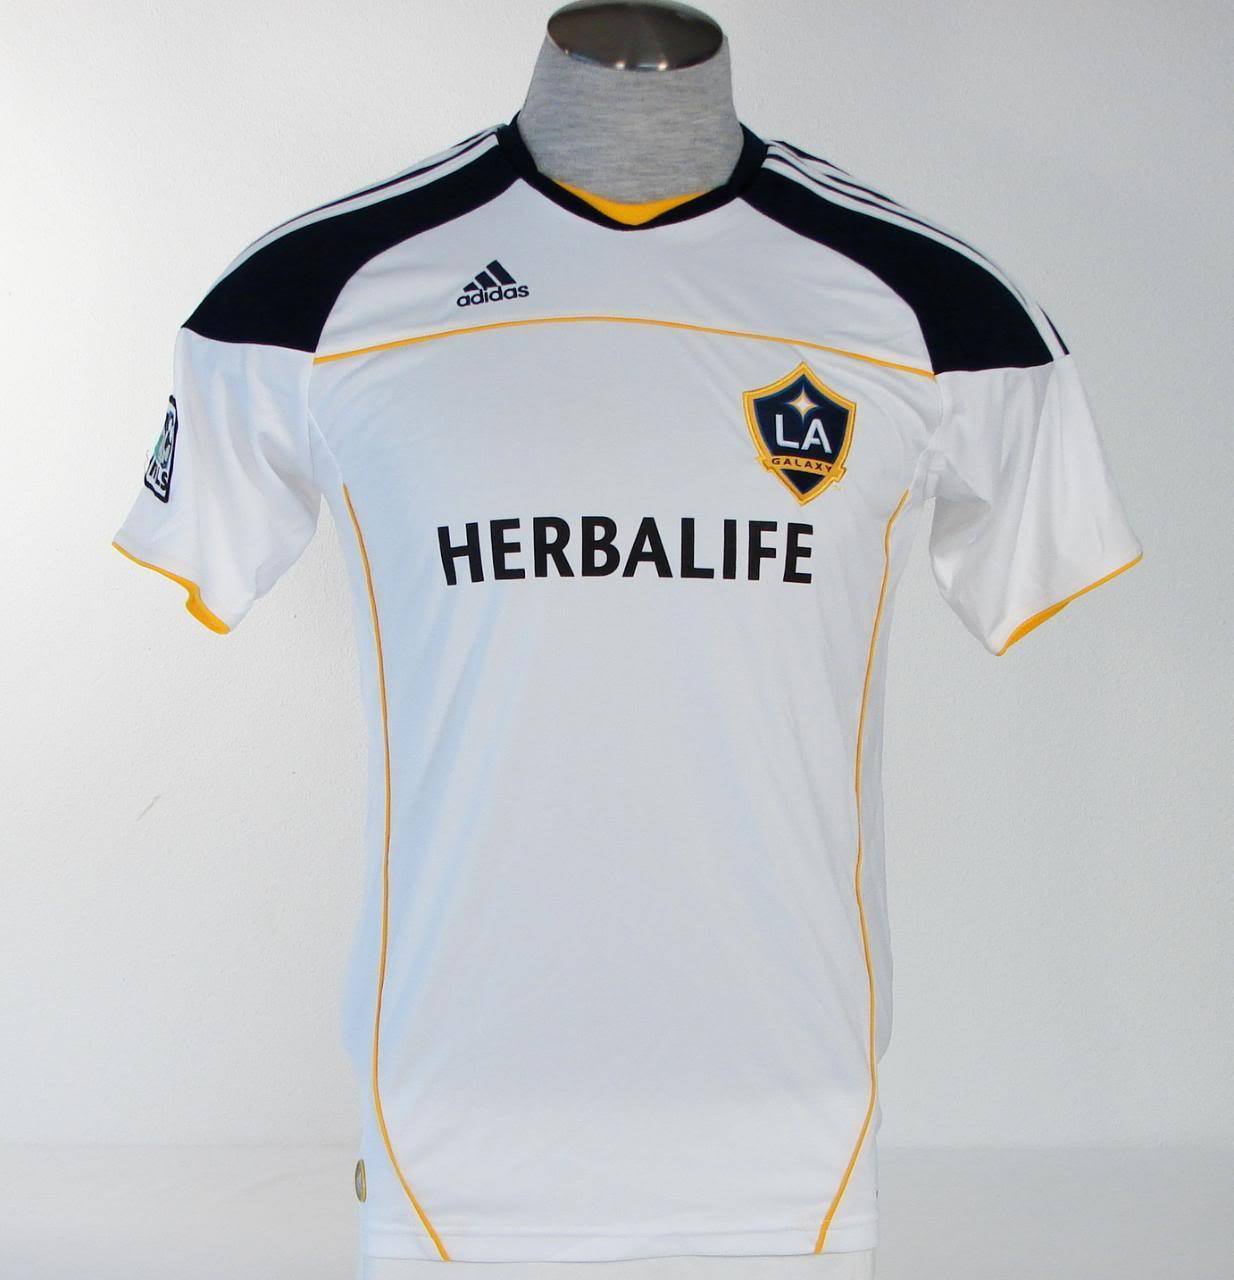 Adidas ClimaLite LA Galaxy Short Sleeve White Soccer Football Jersey Men's NWT - $84.99